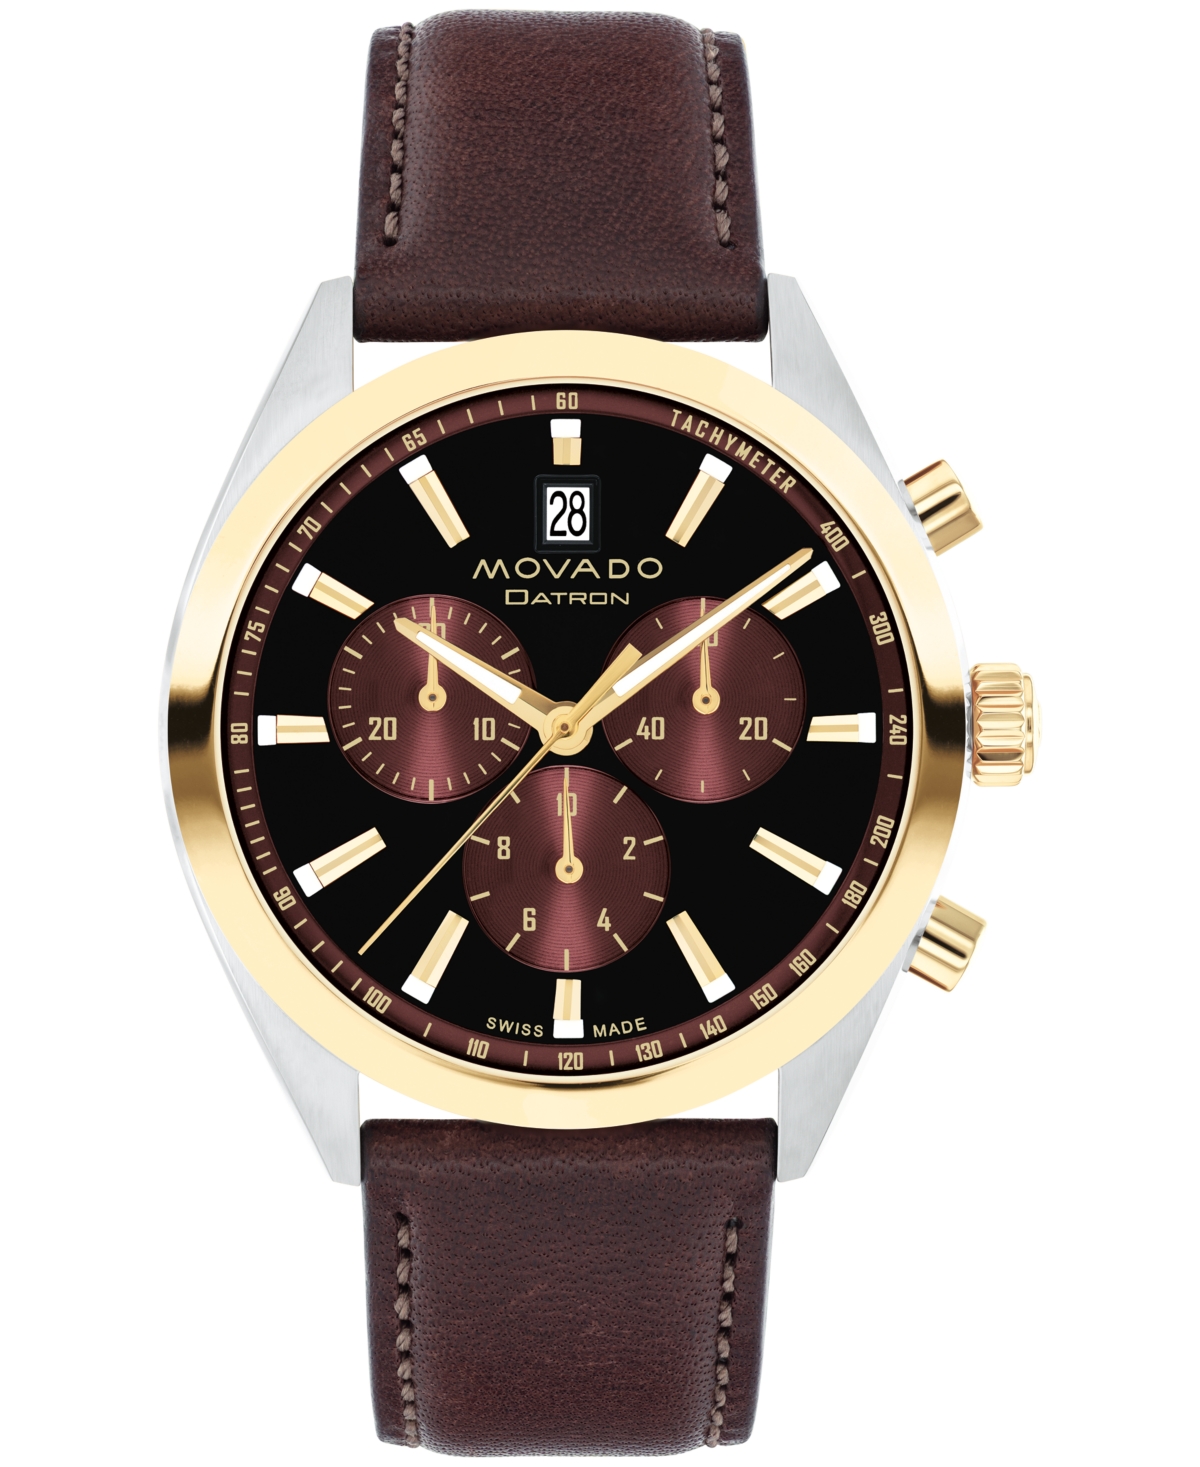 Movado Men's Datron Swiss Quartz Chrono Brown Leather Watch 40mm